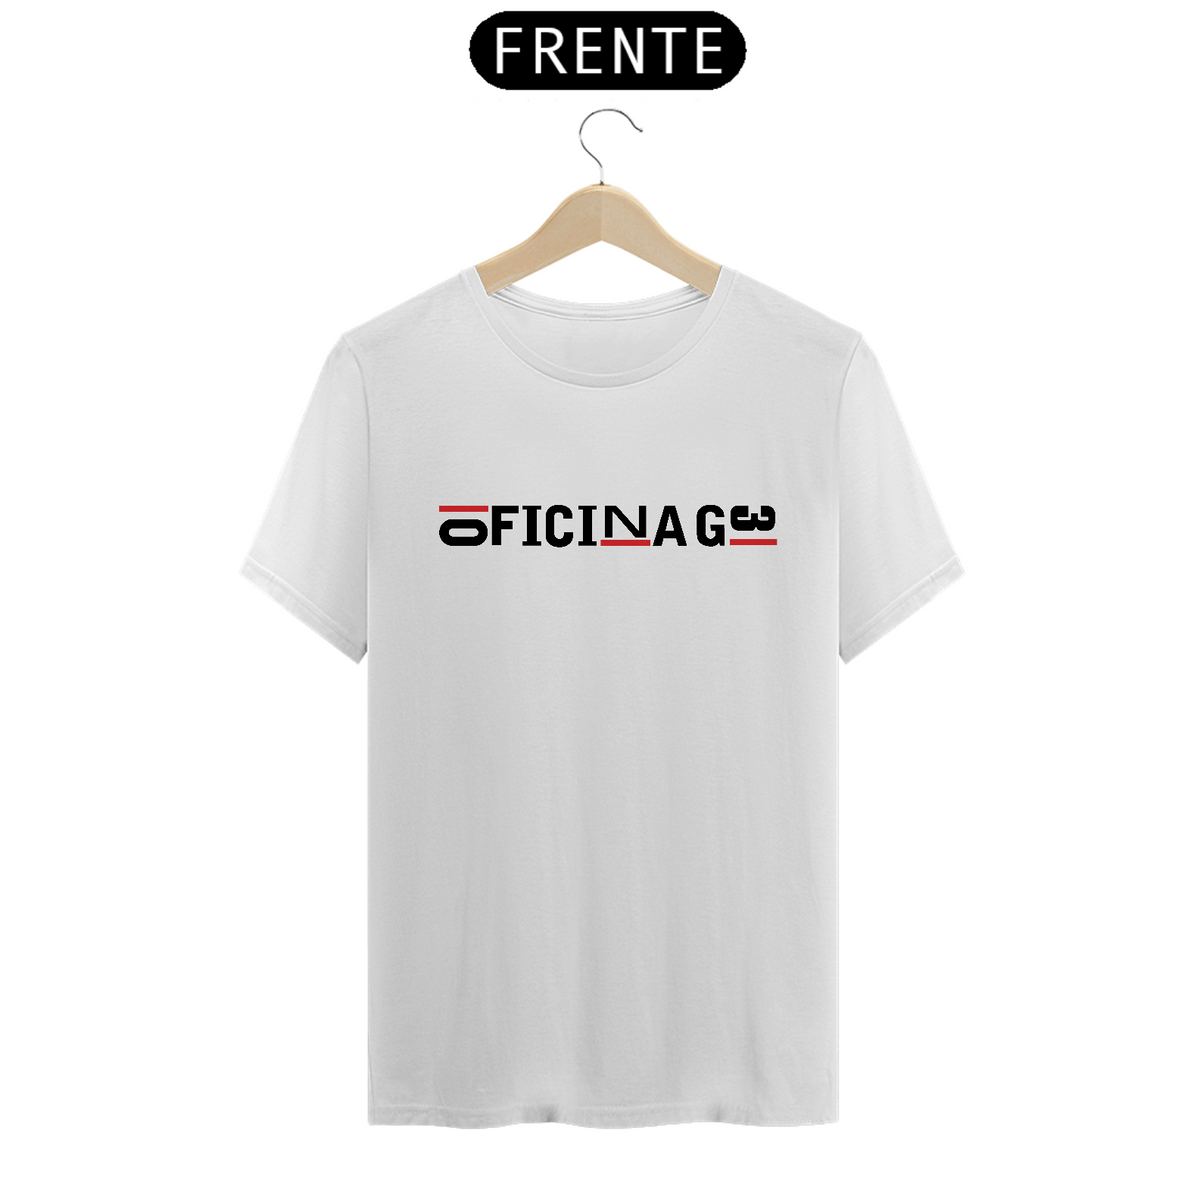 Nome do produto: Camiseta Oficina G3 Classic (cores claras)